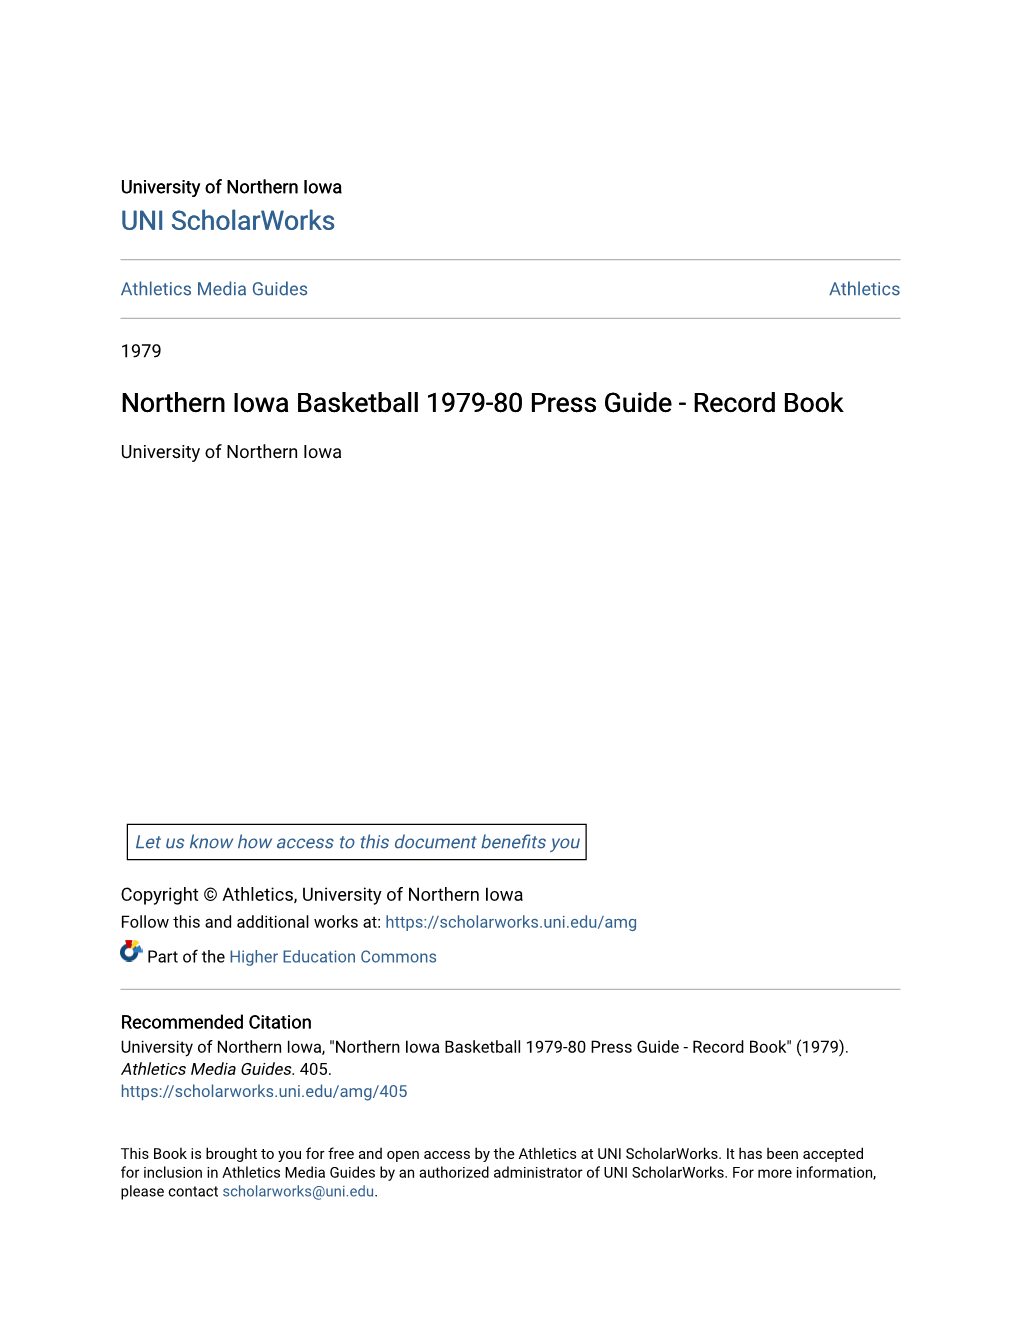 Northern Iowa Basketball 1979-80 Press Guide - Record Book